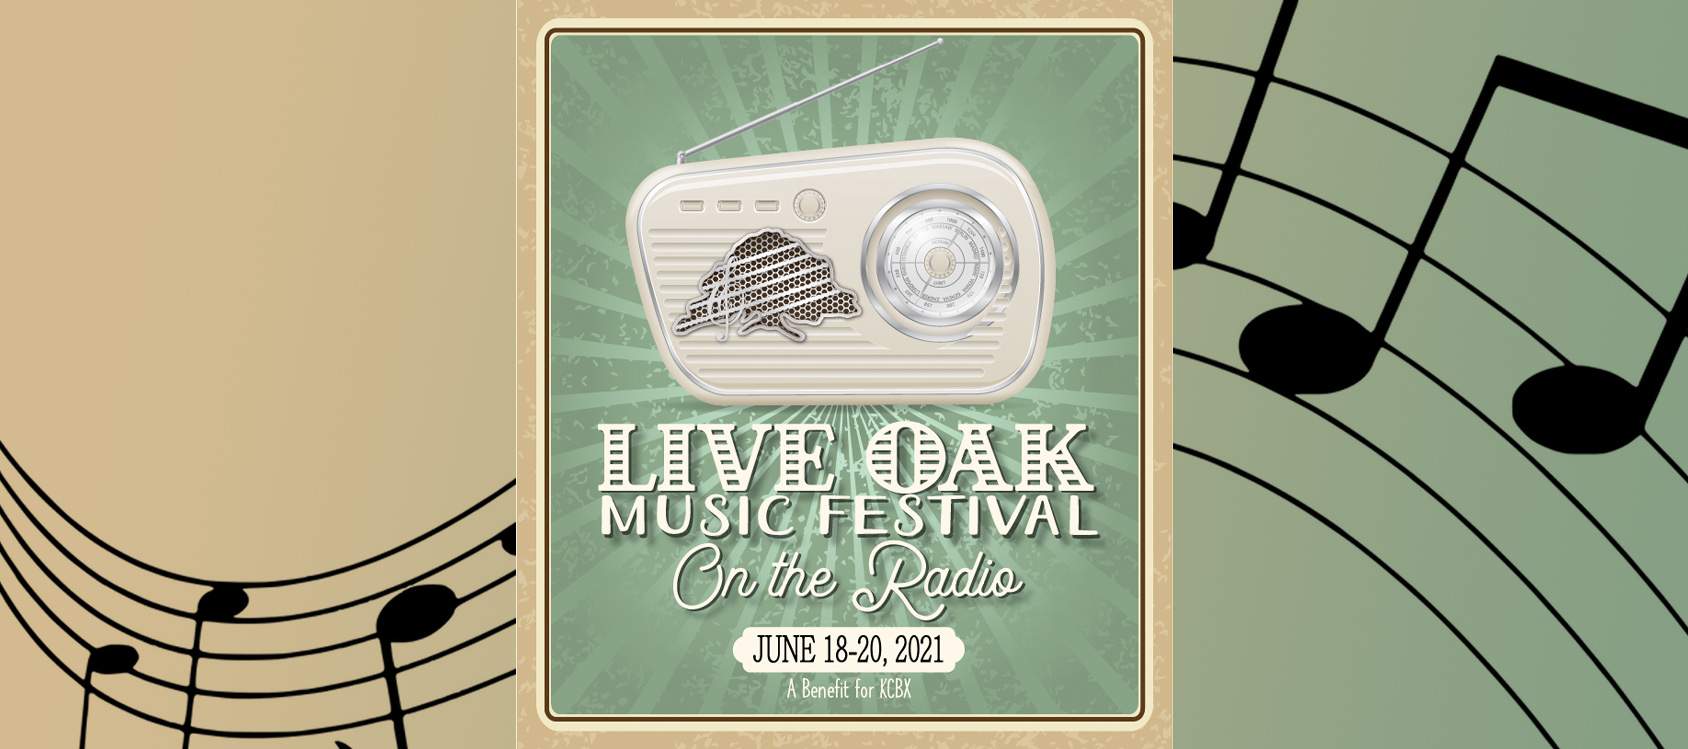 Live Oak Music Festival will return virtually in June 2021 • Paso